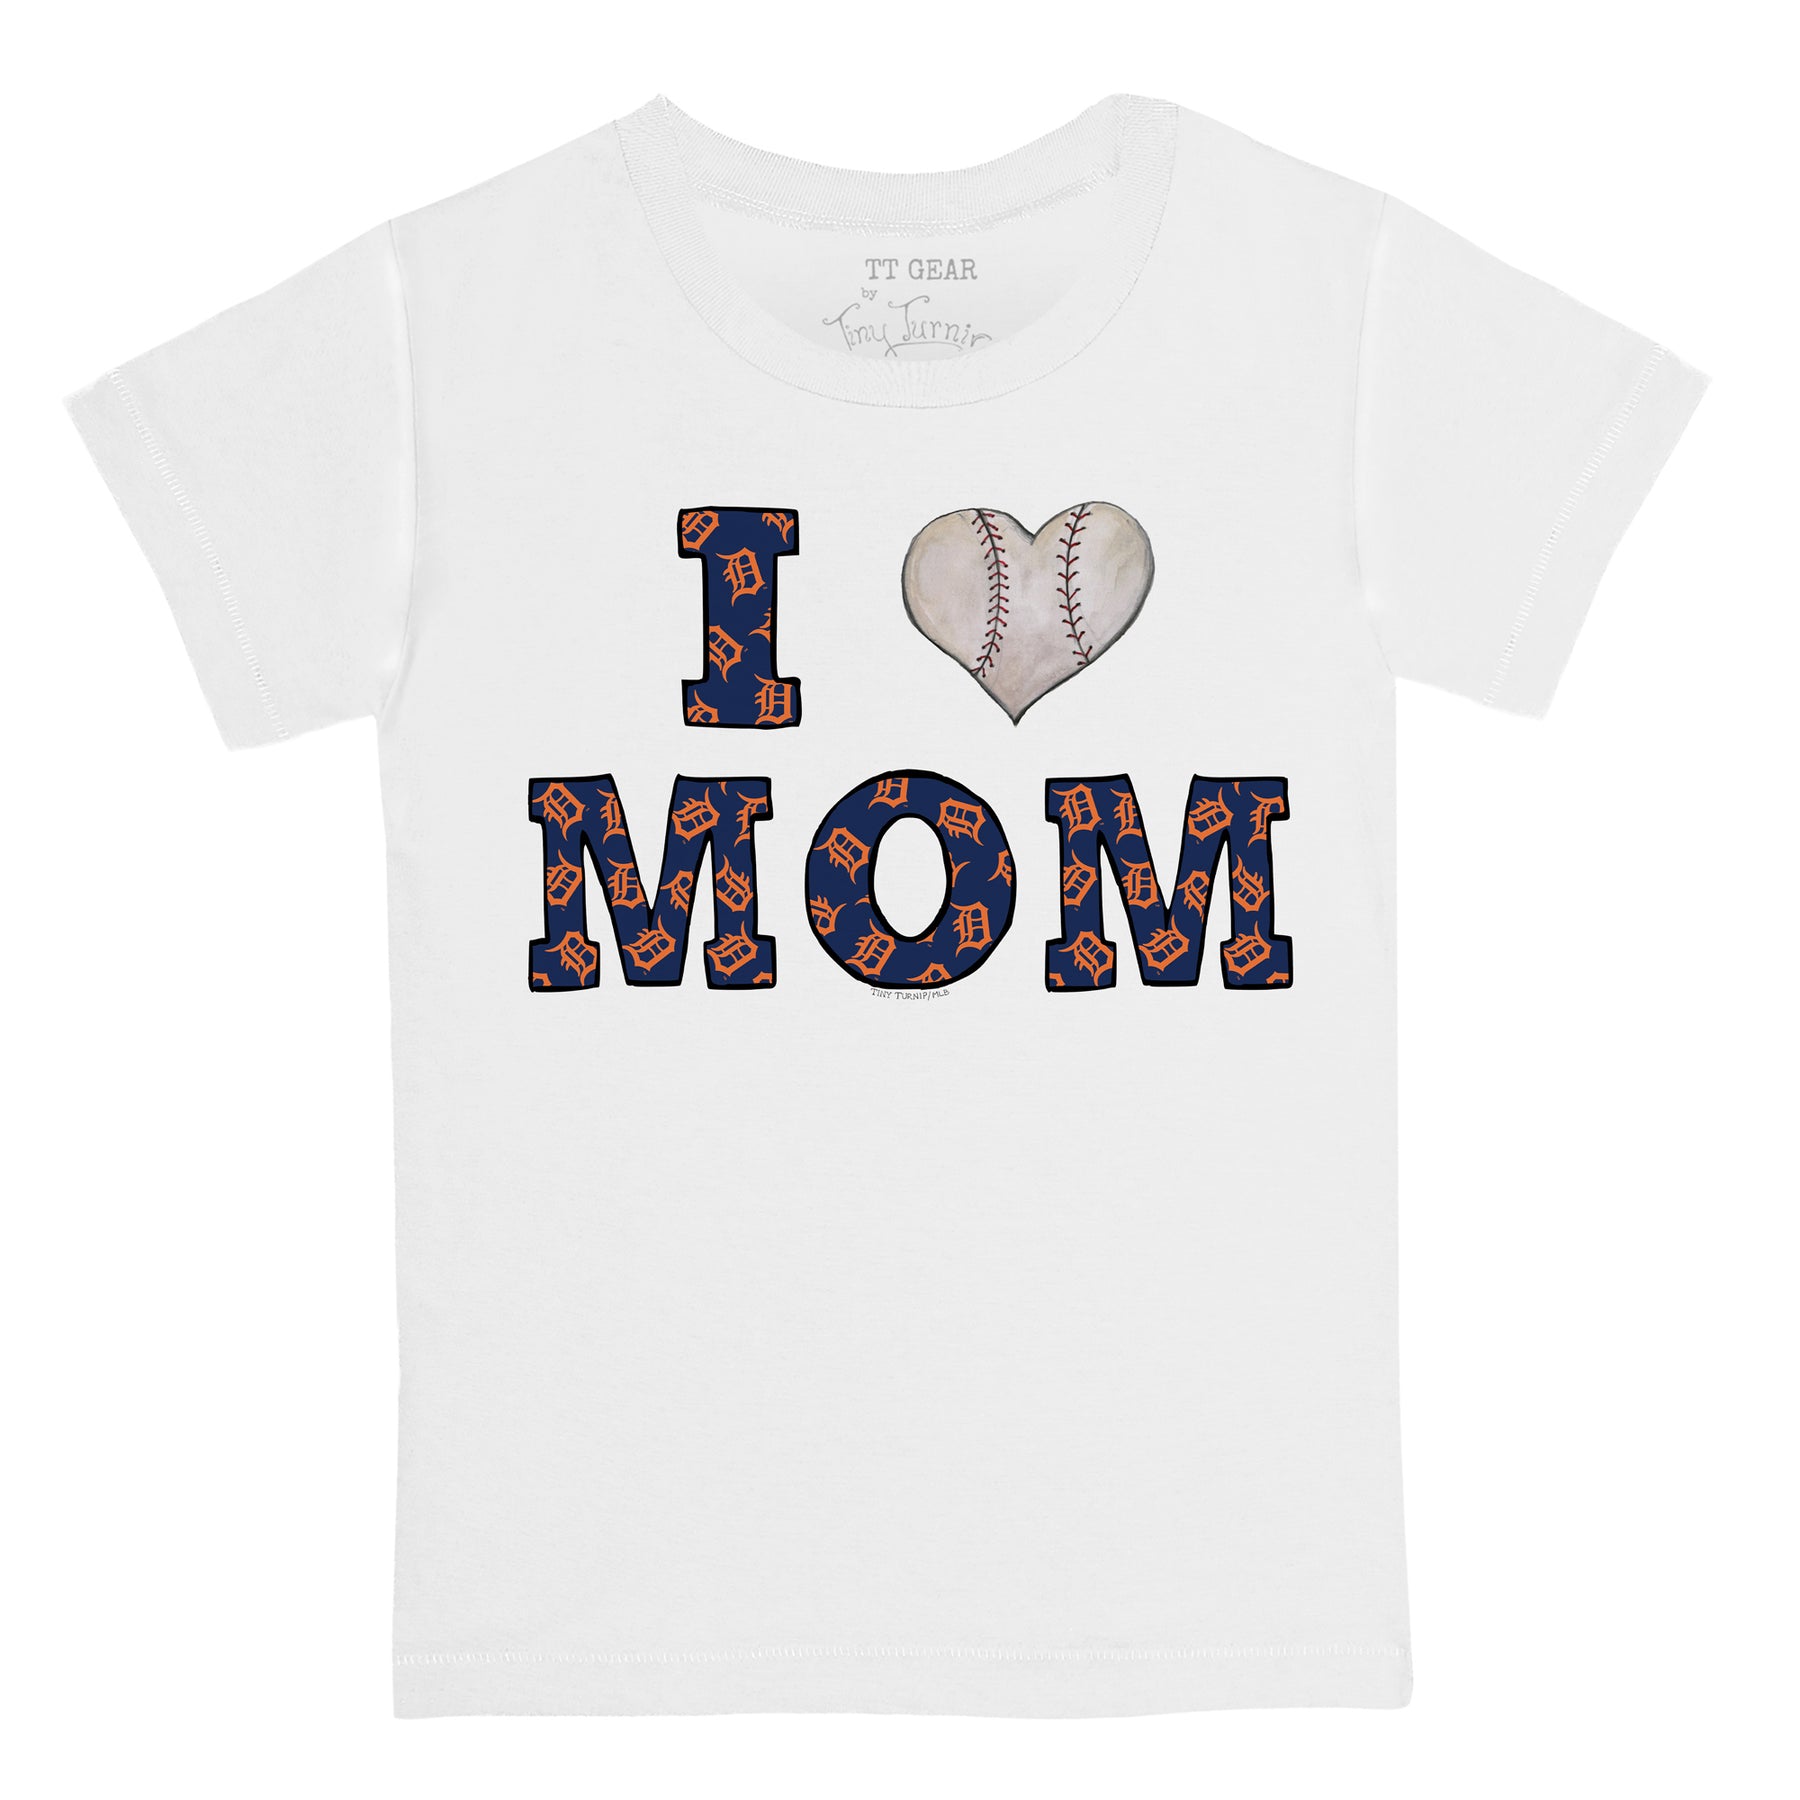 Lids Detroit Tigers Tiny Turnip Infant Baseball Love Raglan 3/4 Sleeve T- Shirt - White/Navy